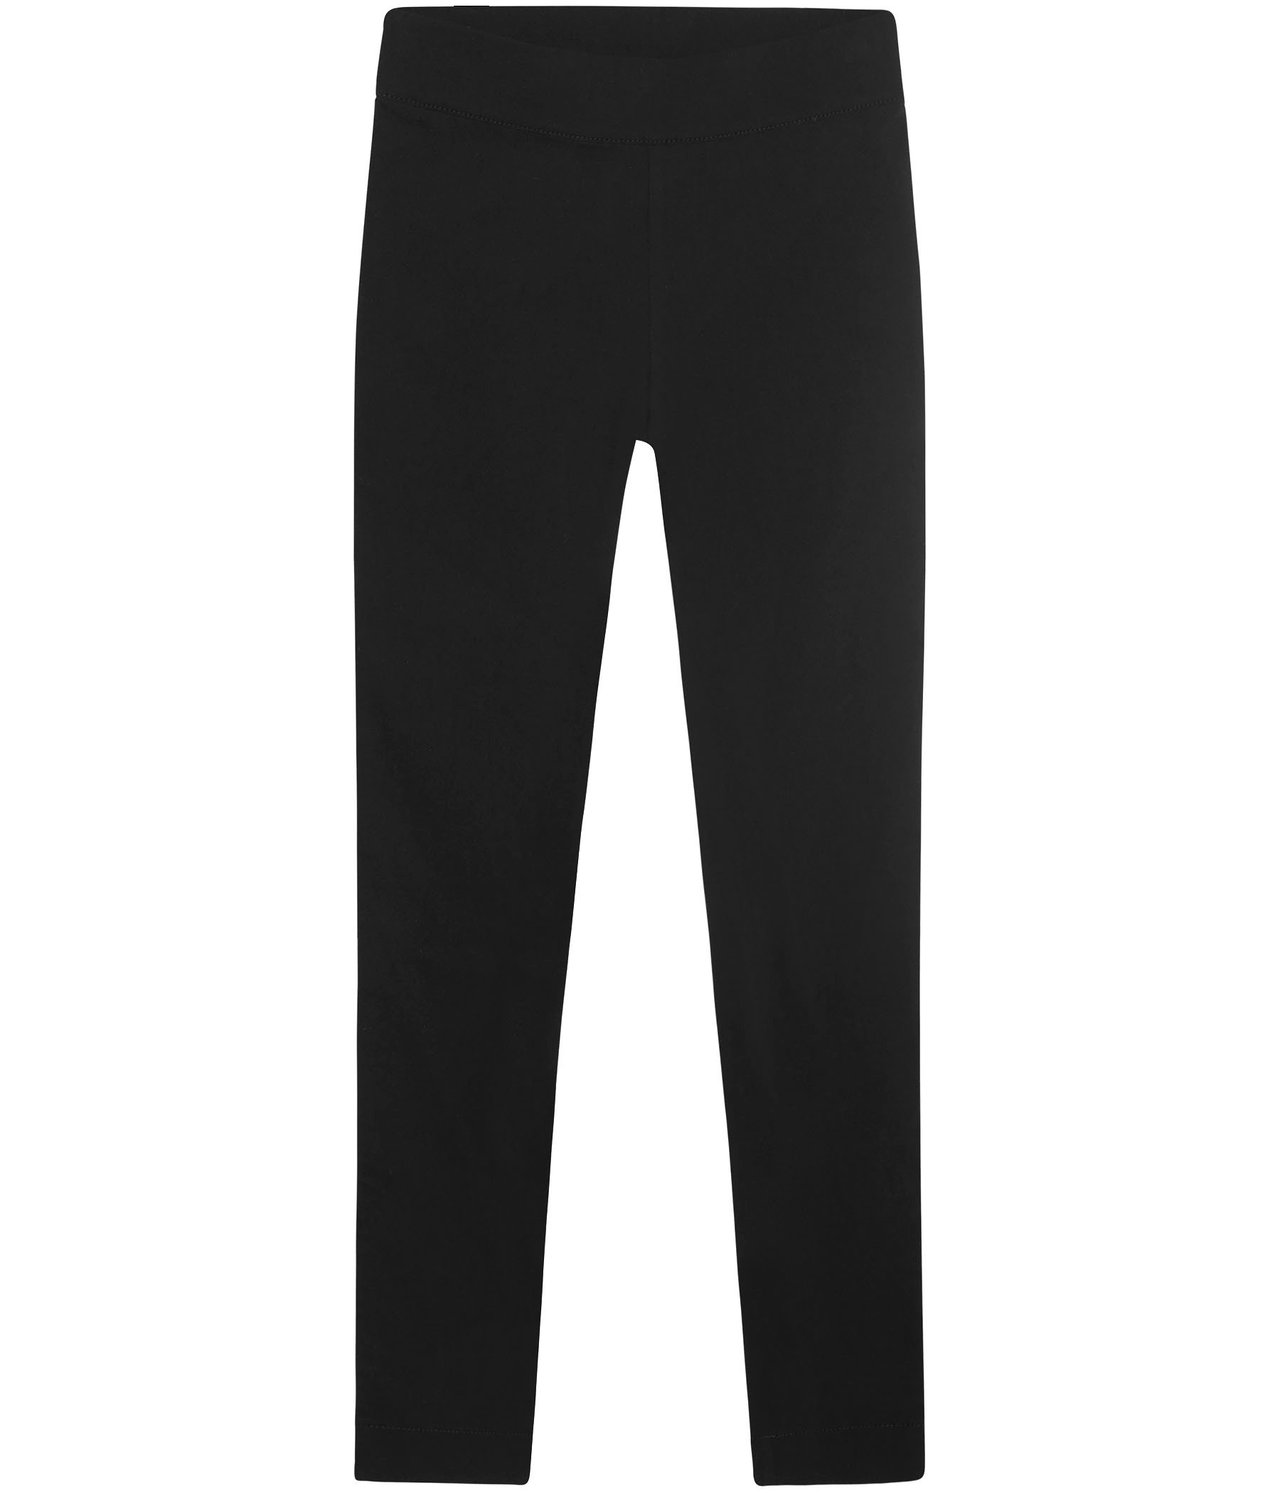 Spodnie Slim fit - Czarne - 4